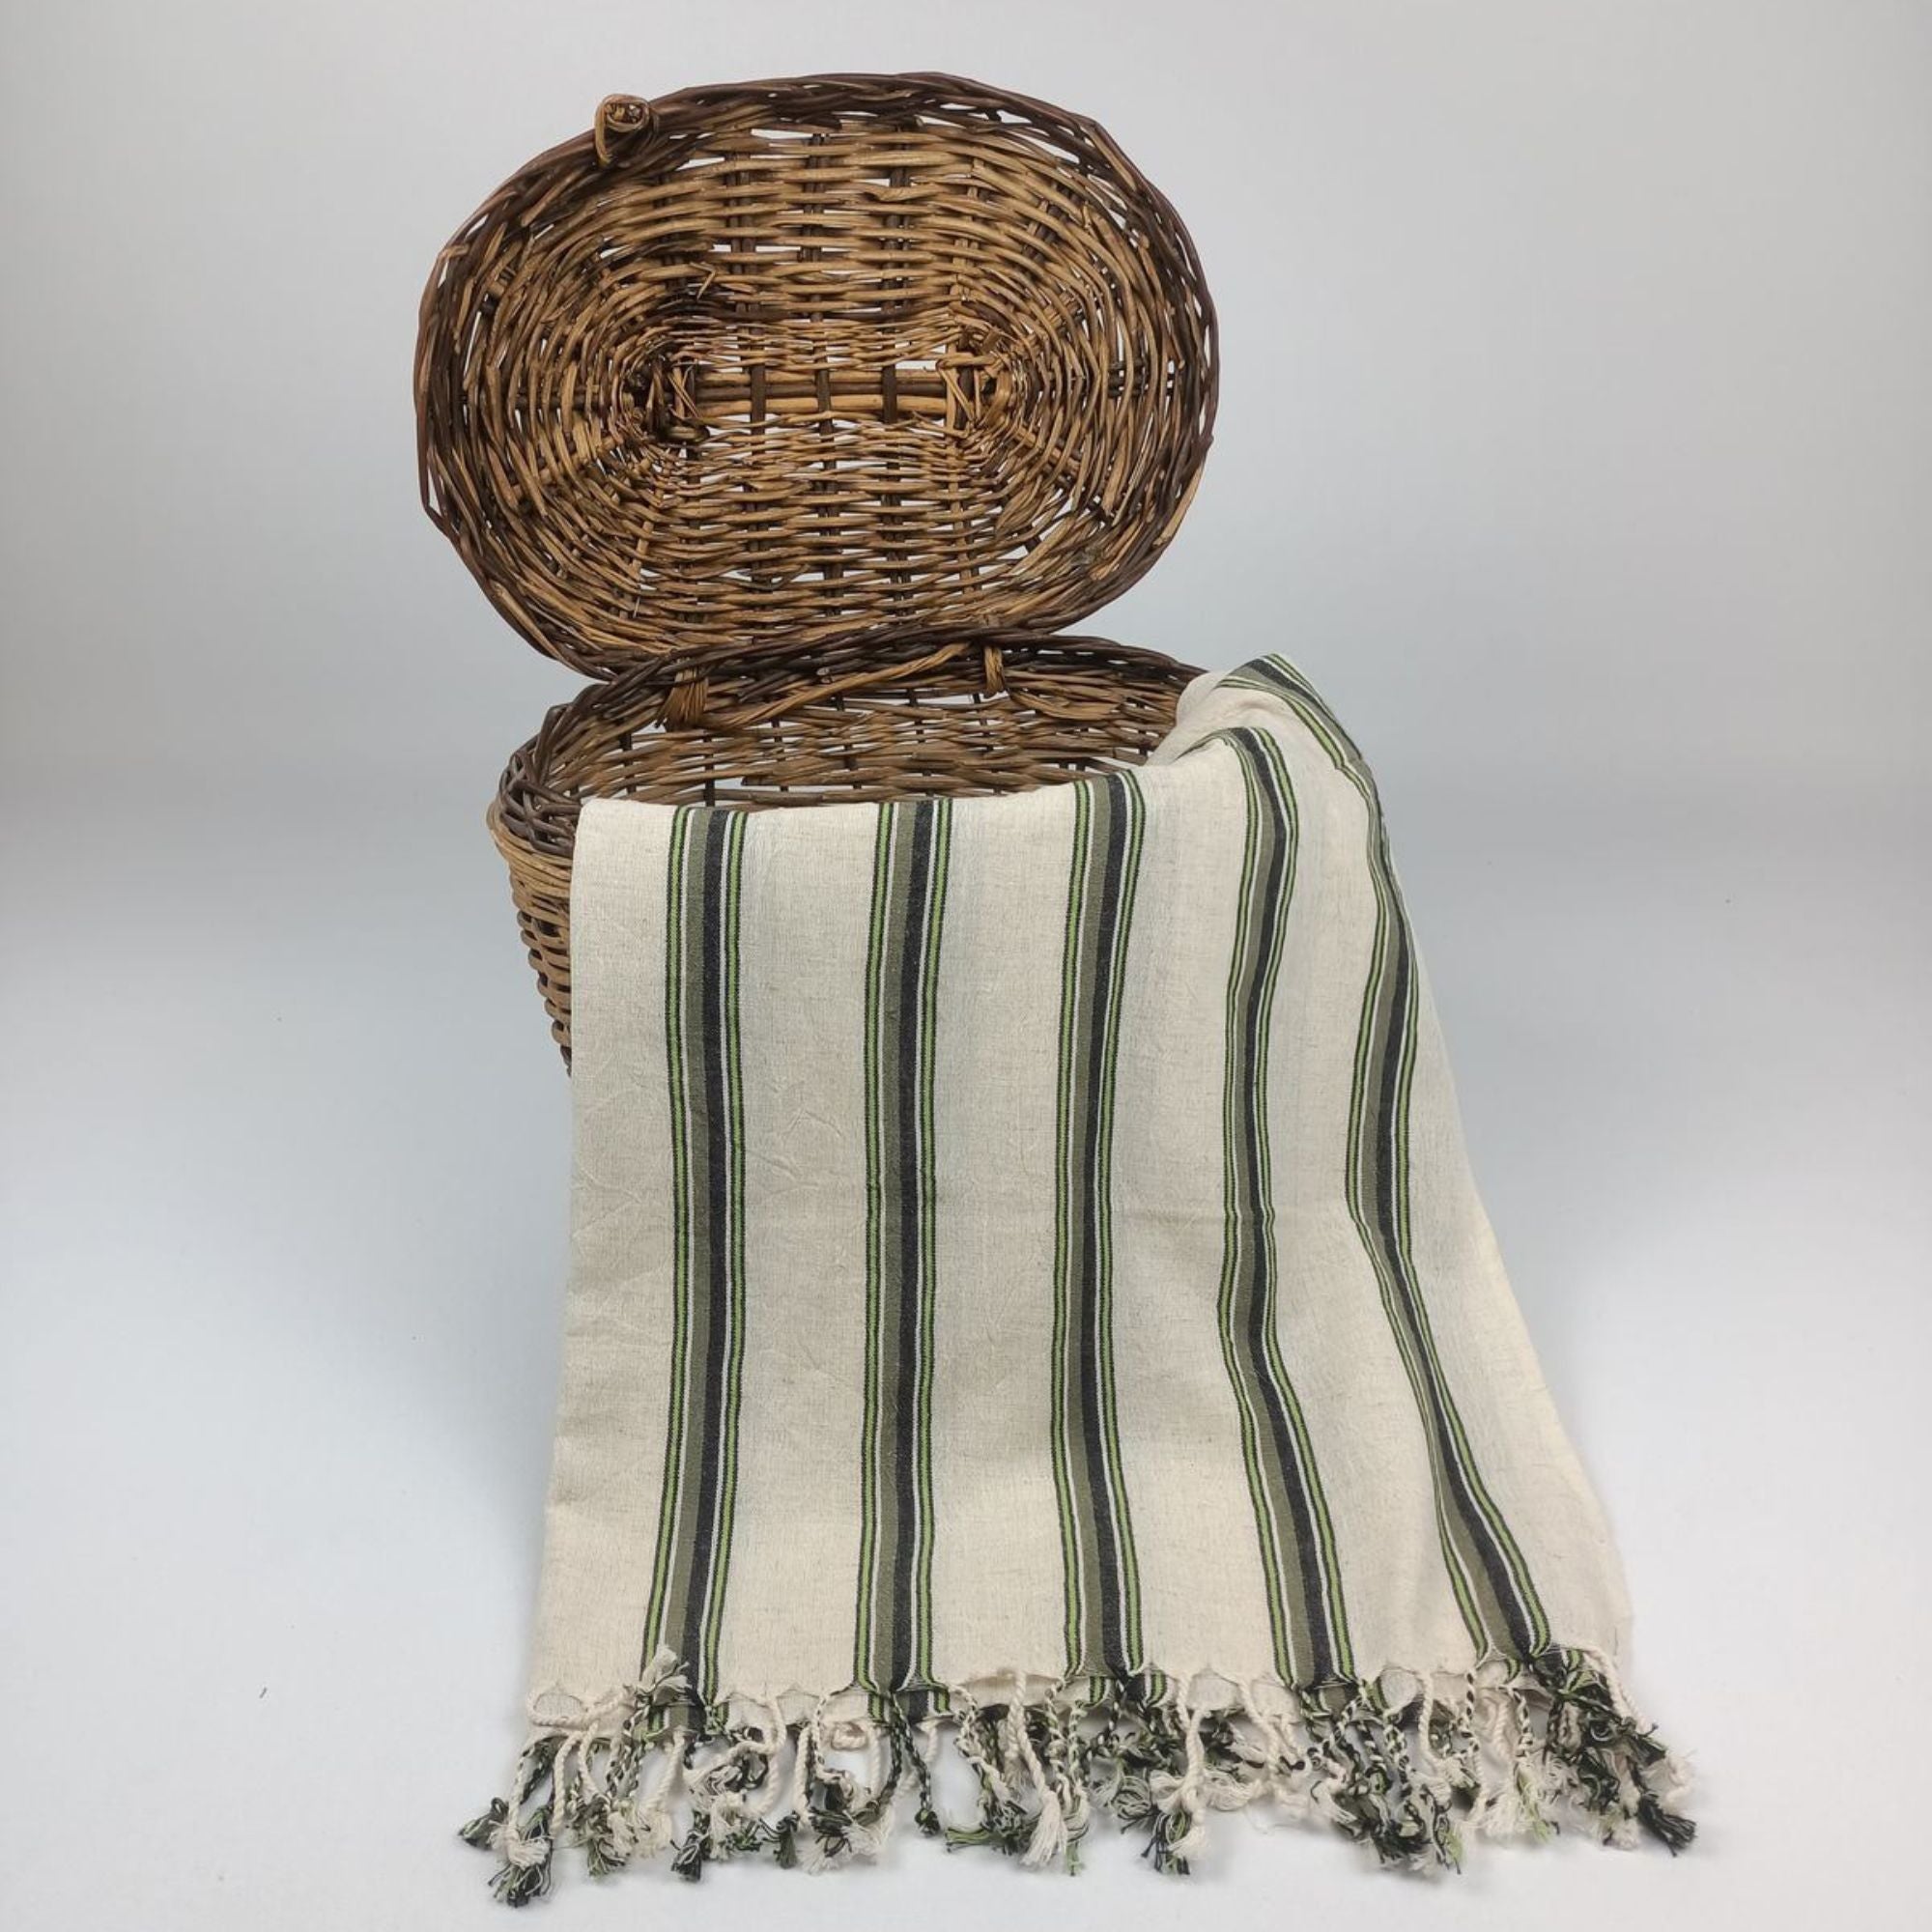 Lydia Turkish Towel - 100% Cotton - 100x180 cm